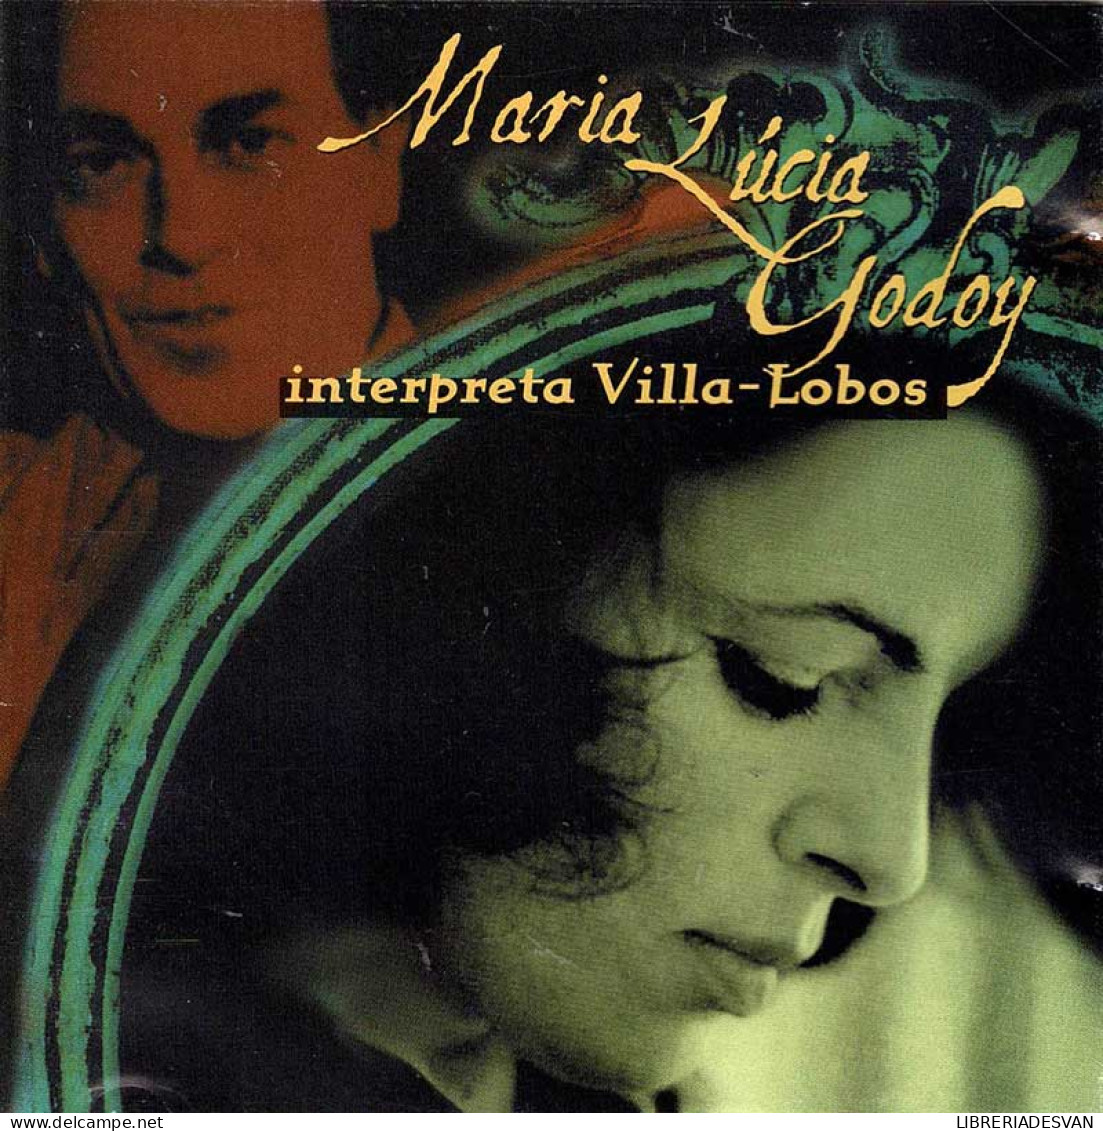 Maria Lúcia Godoy - Interpreta Villa Lobos. CD - Classical